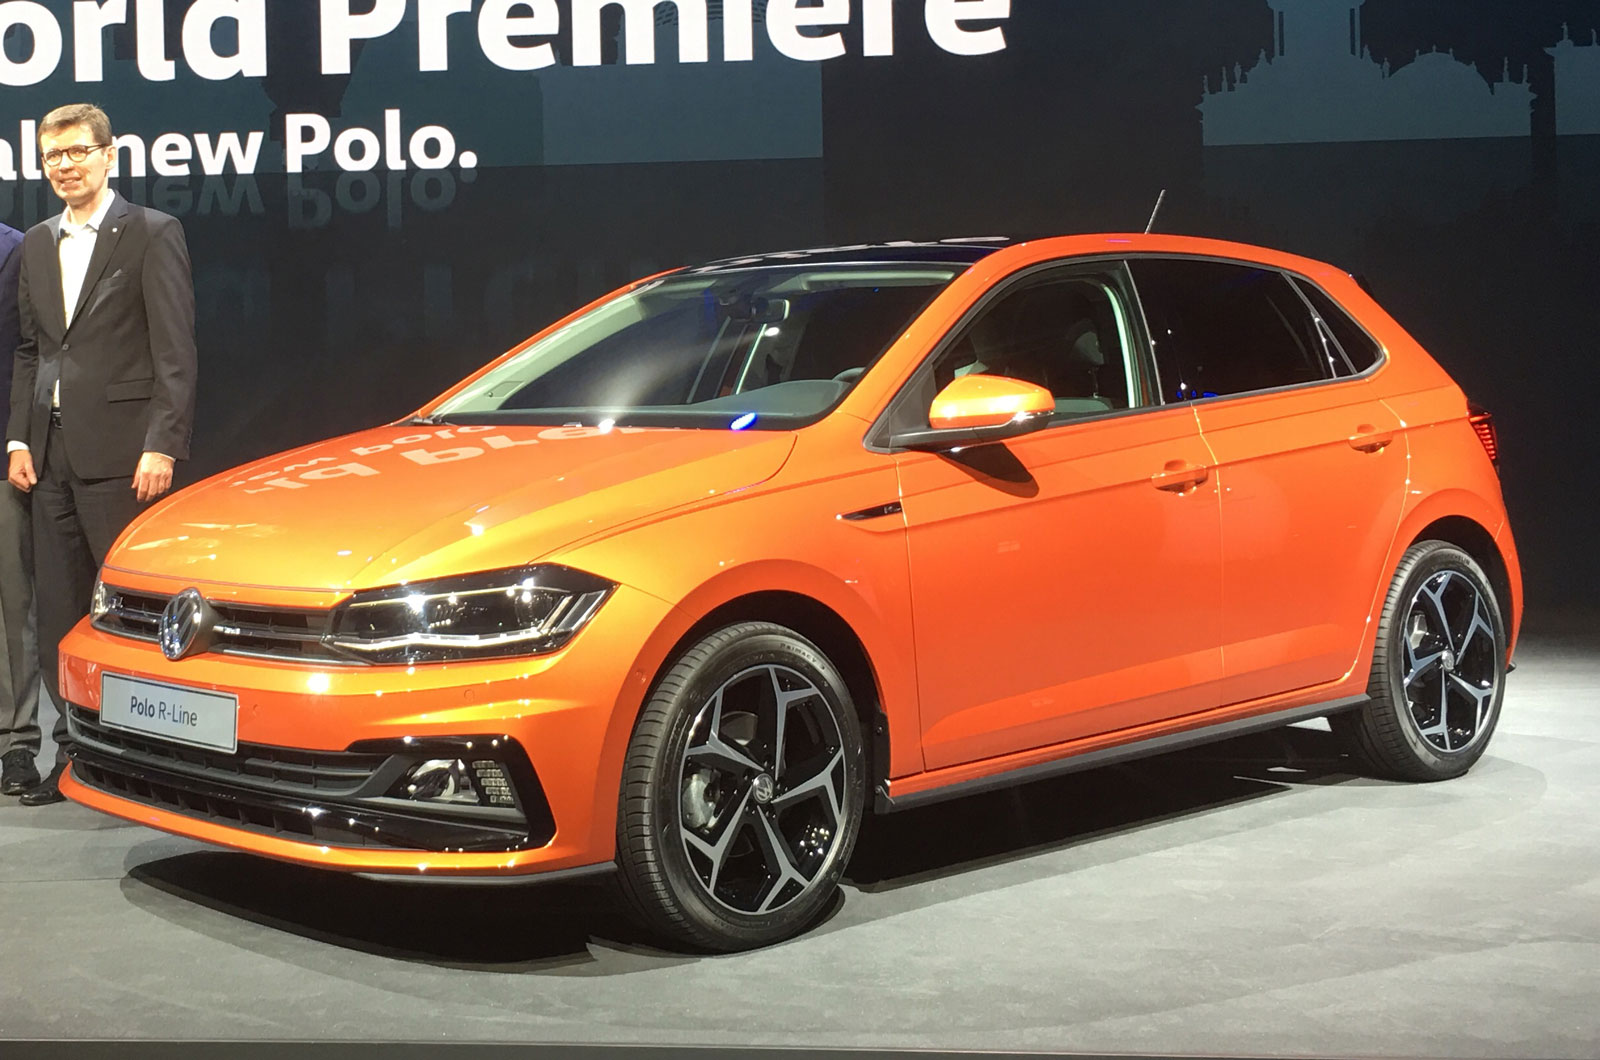 2017 Volkswagen Polo продемонстрировала новые фотографии соперника Ford Fiesta